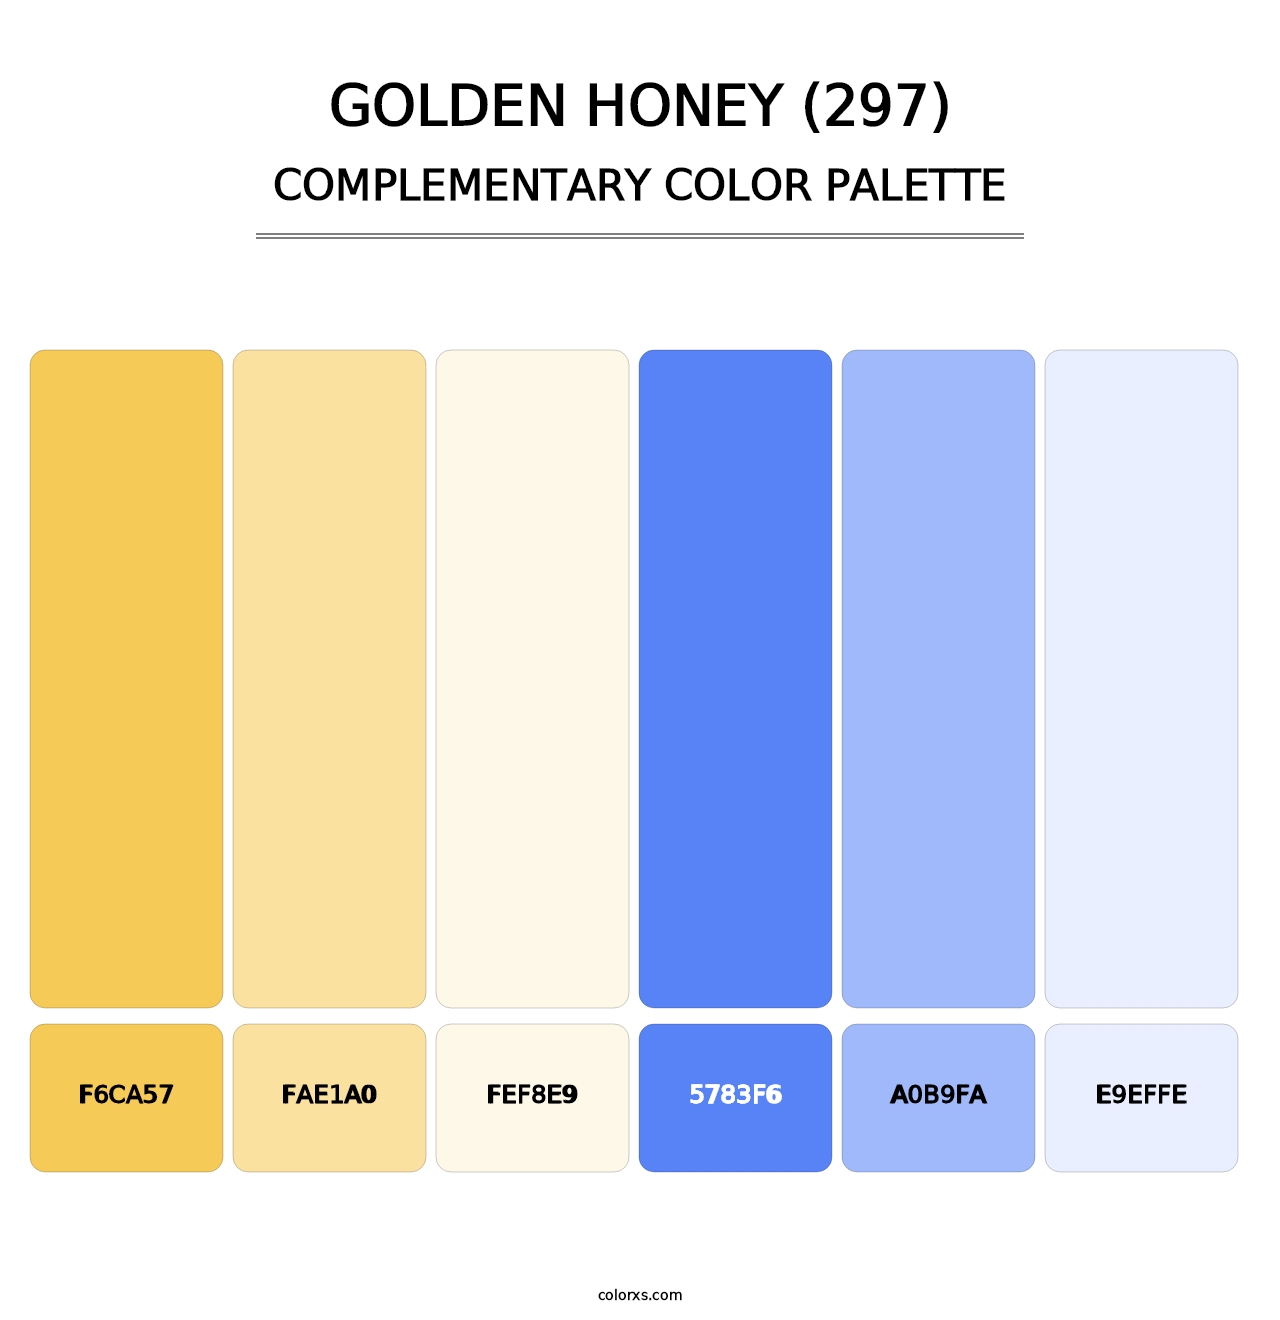 Golden Honey (297) - Complementary Color Palette